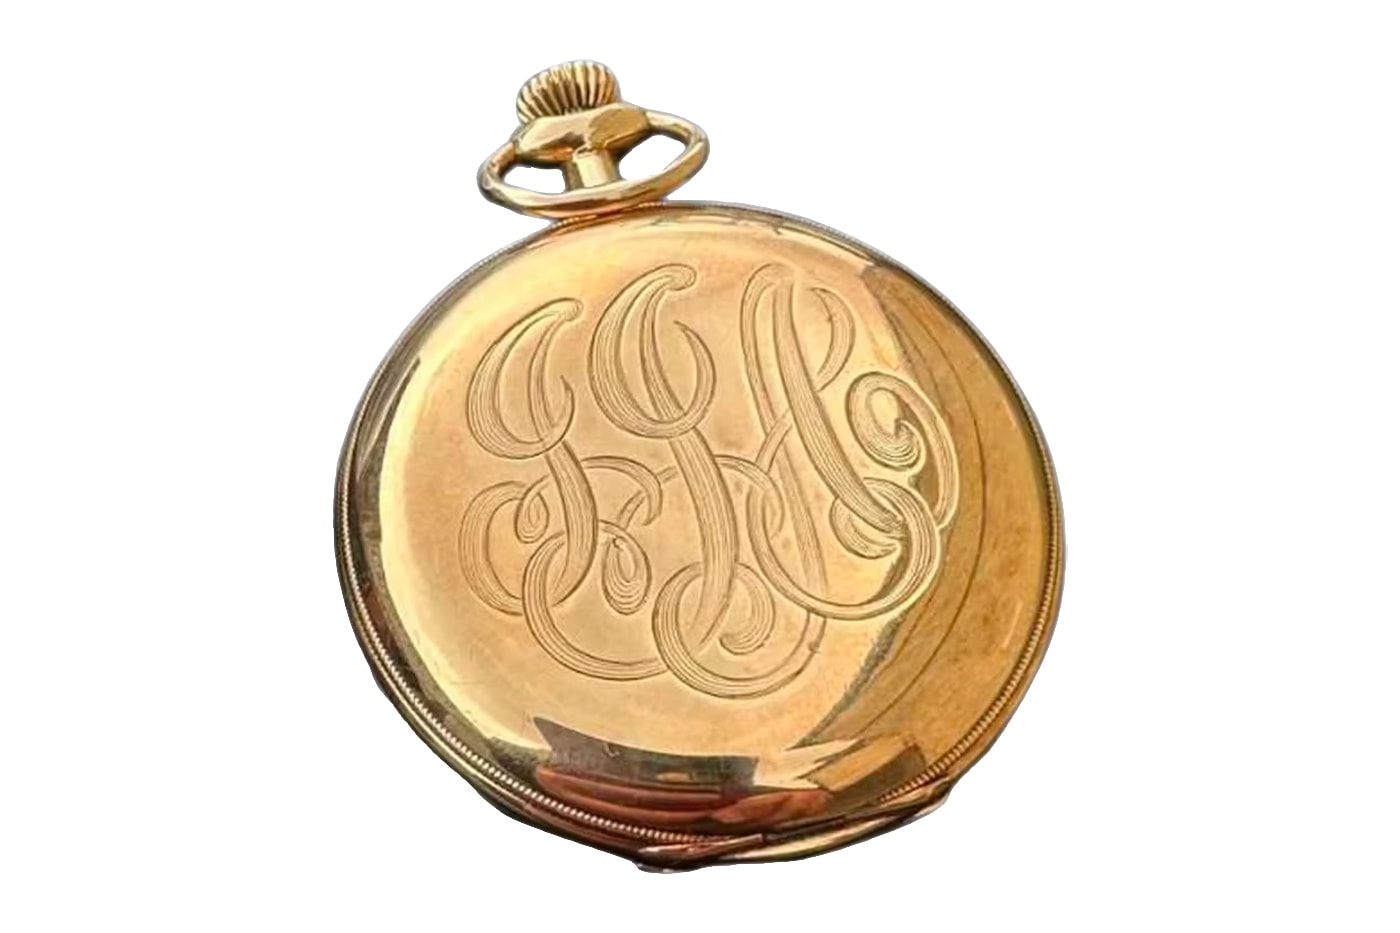 Titanic Gold Watch Sells at Auction John Jacob Astor